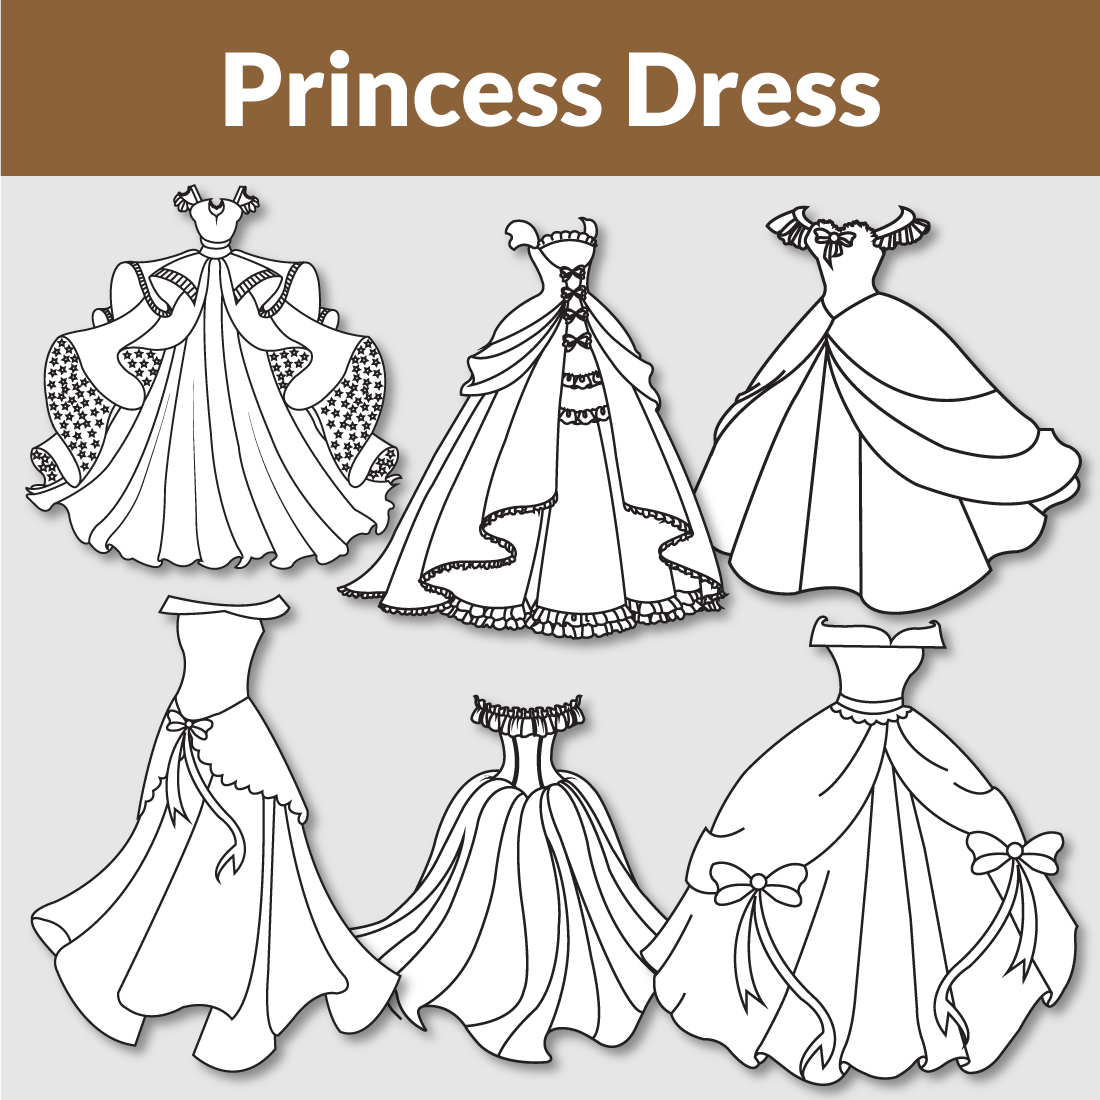 Princess Dress Master Bundle preview image.